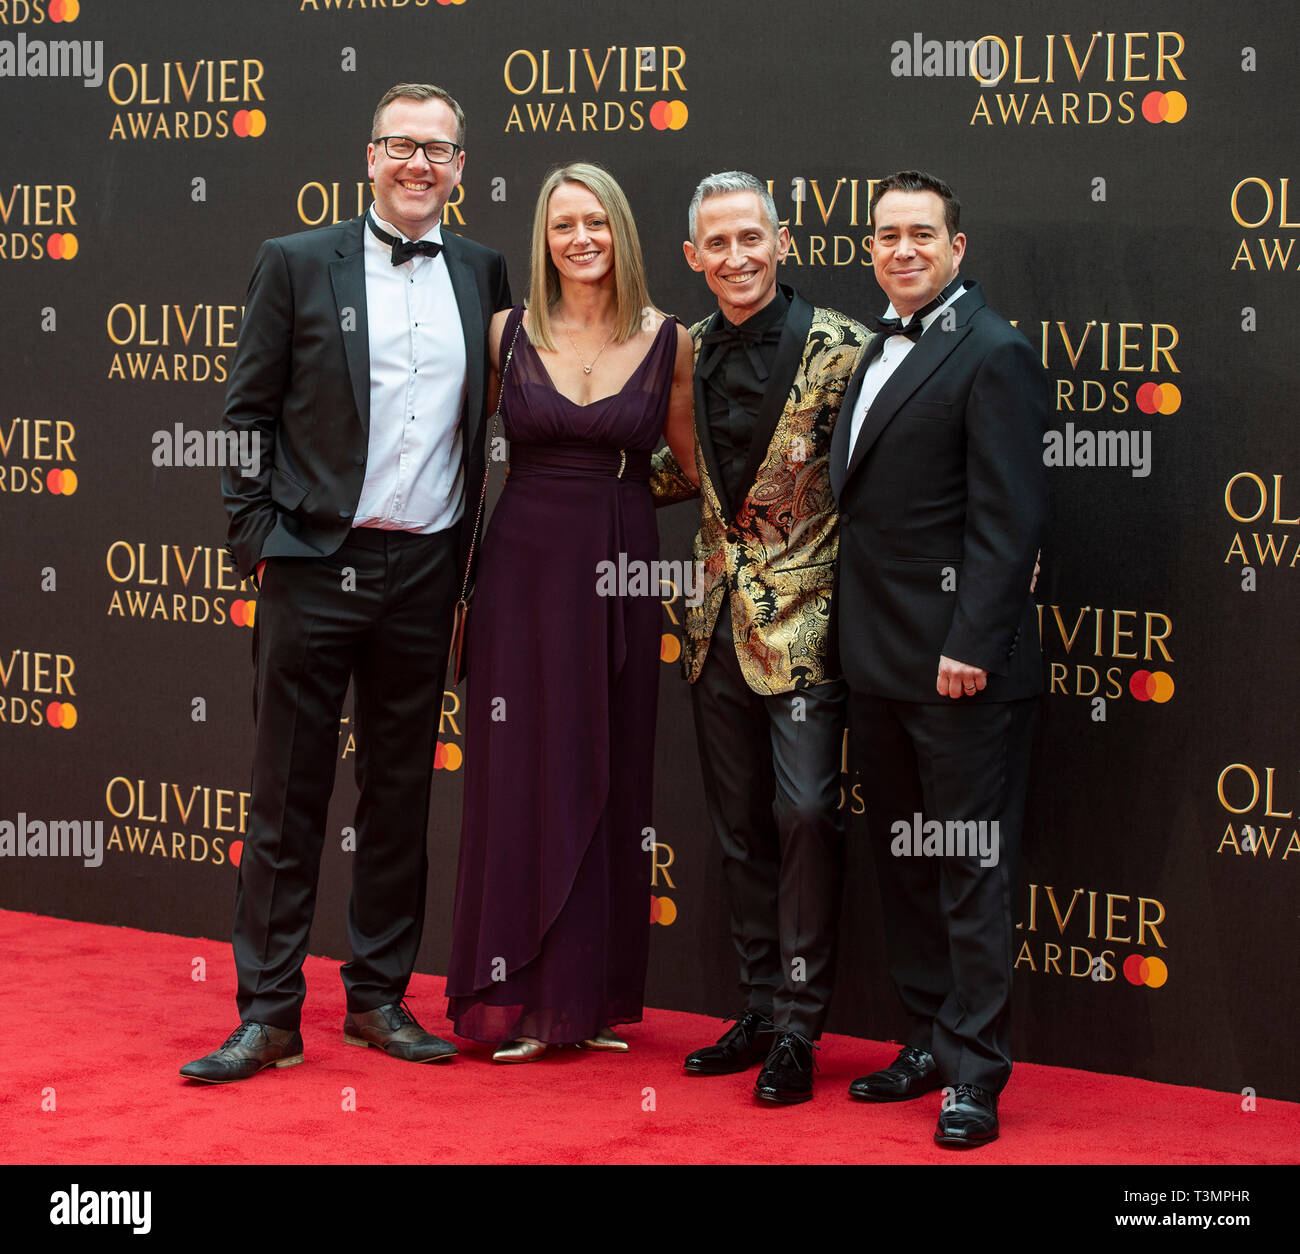 Londra, Inghilterra - aprile 07: Valutazione assiste l'Olivier Awards 2019 con Mastercard al Royal Albert Hall il 7 aprile 2019 a Londra, Inghilterra Foto Stock